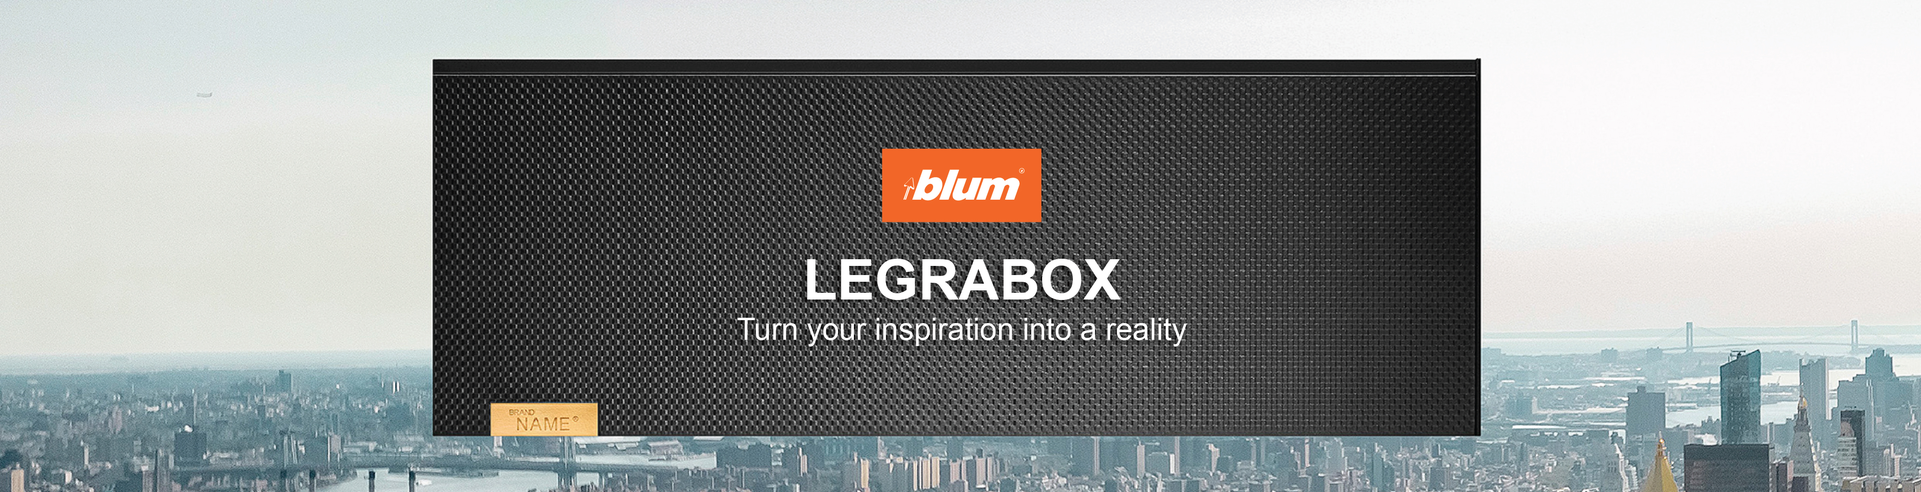 LEGRABOX banner special edition indivdual